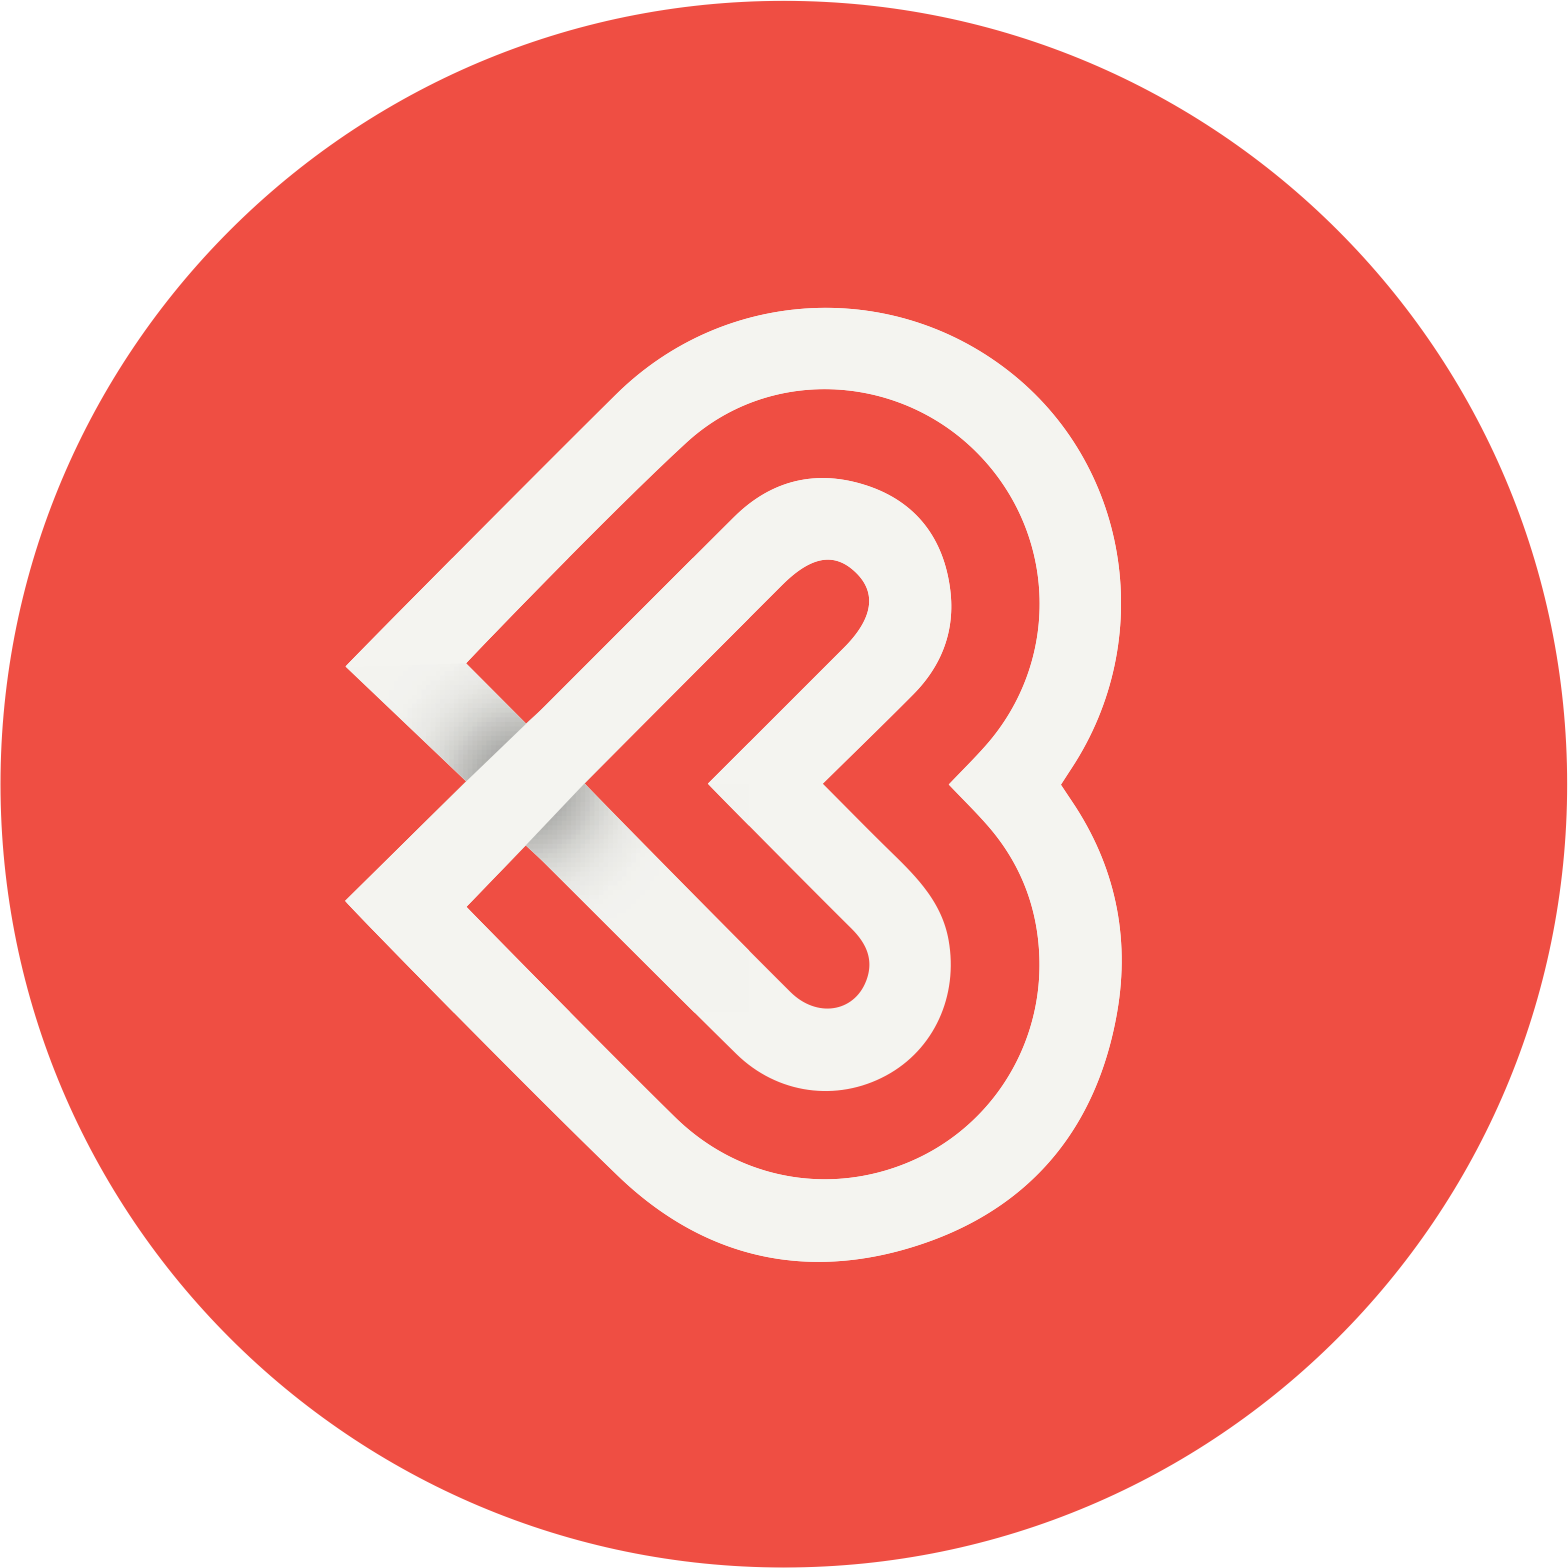 BEAUTYLINK Logo #02